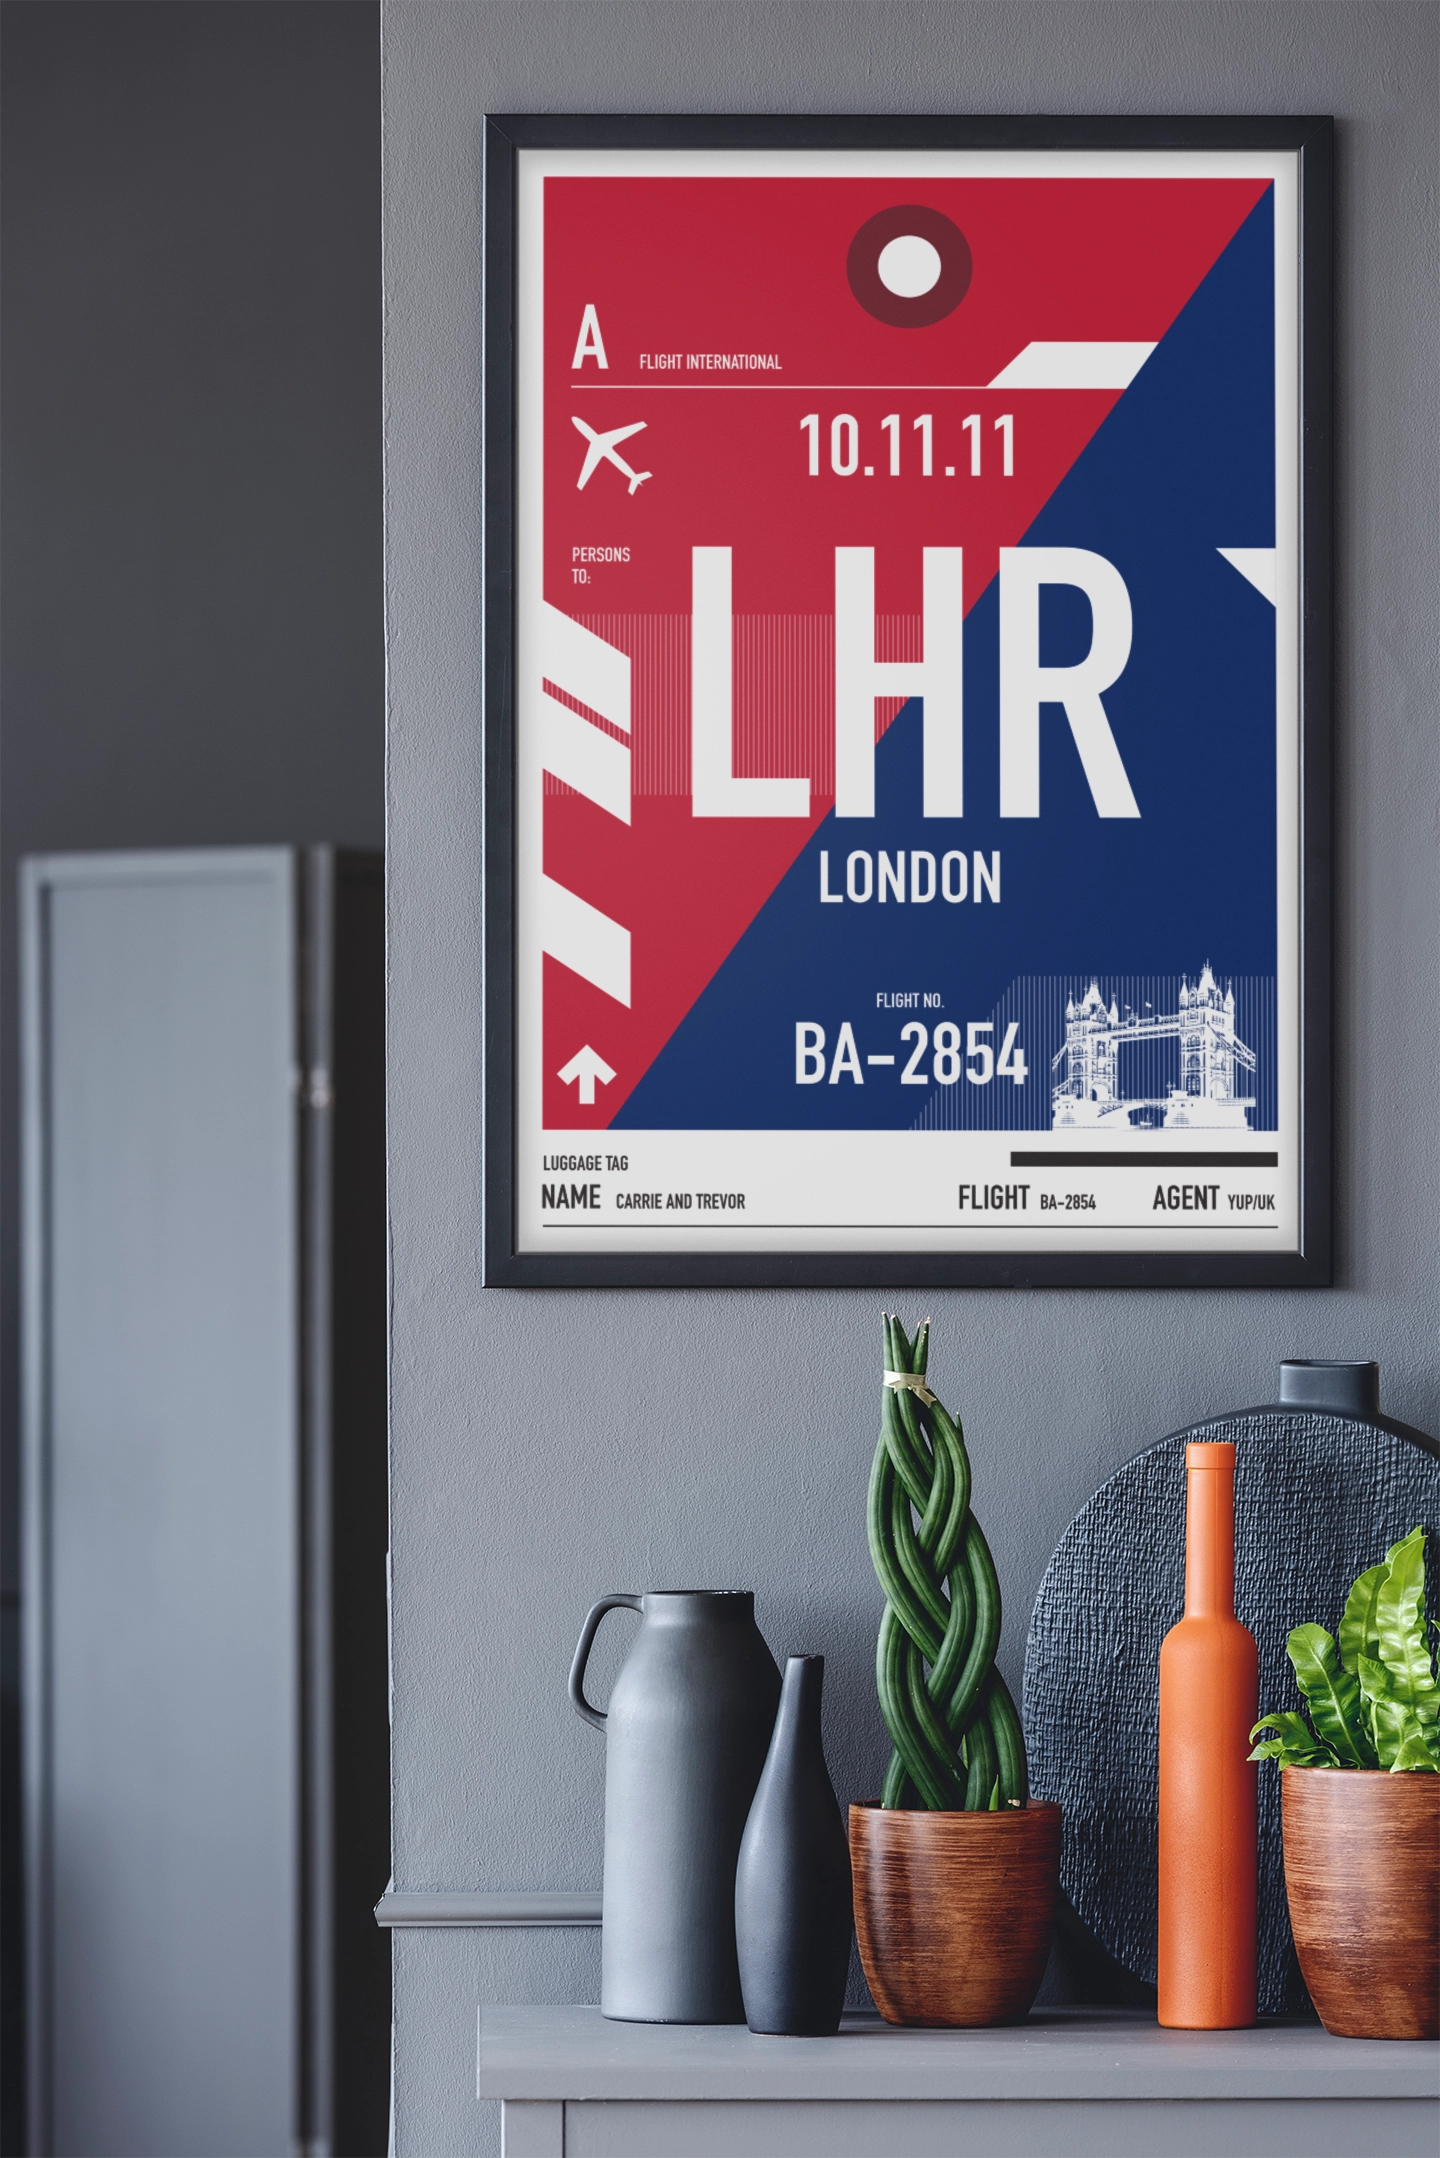 London Tower Bridge print hanging on kitchen wall